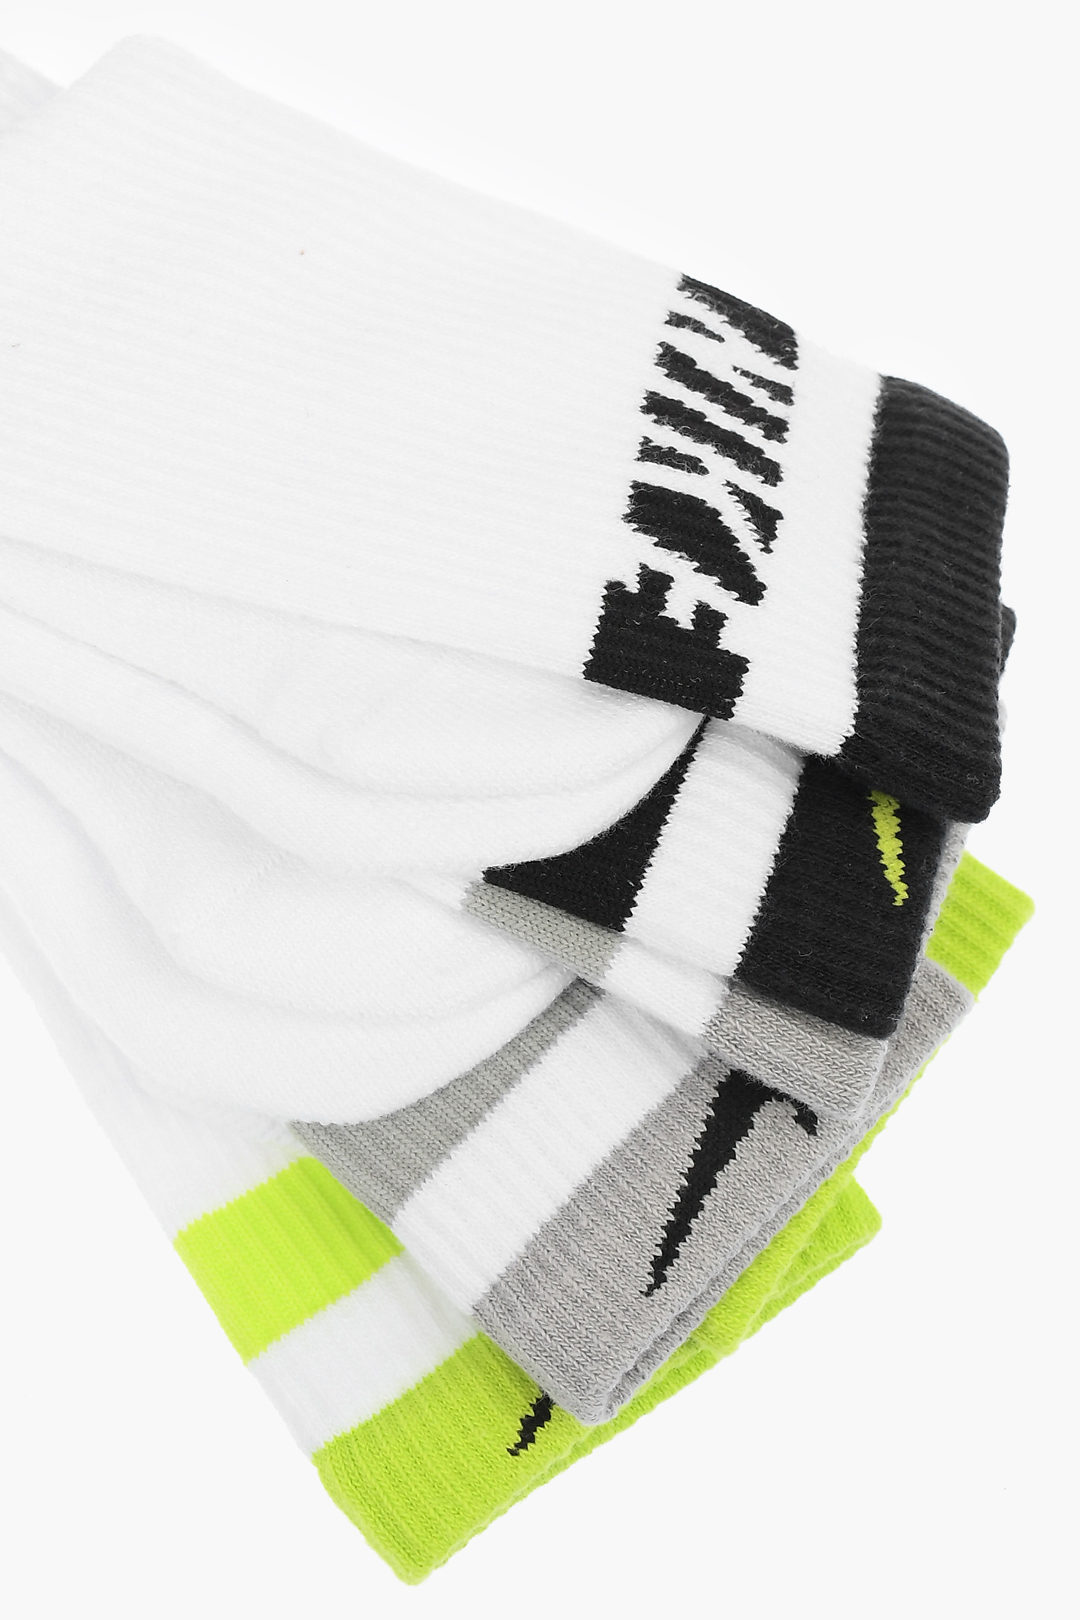 Nike Set Pair of Socks men - Glamood Outlet